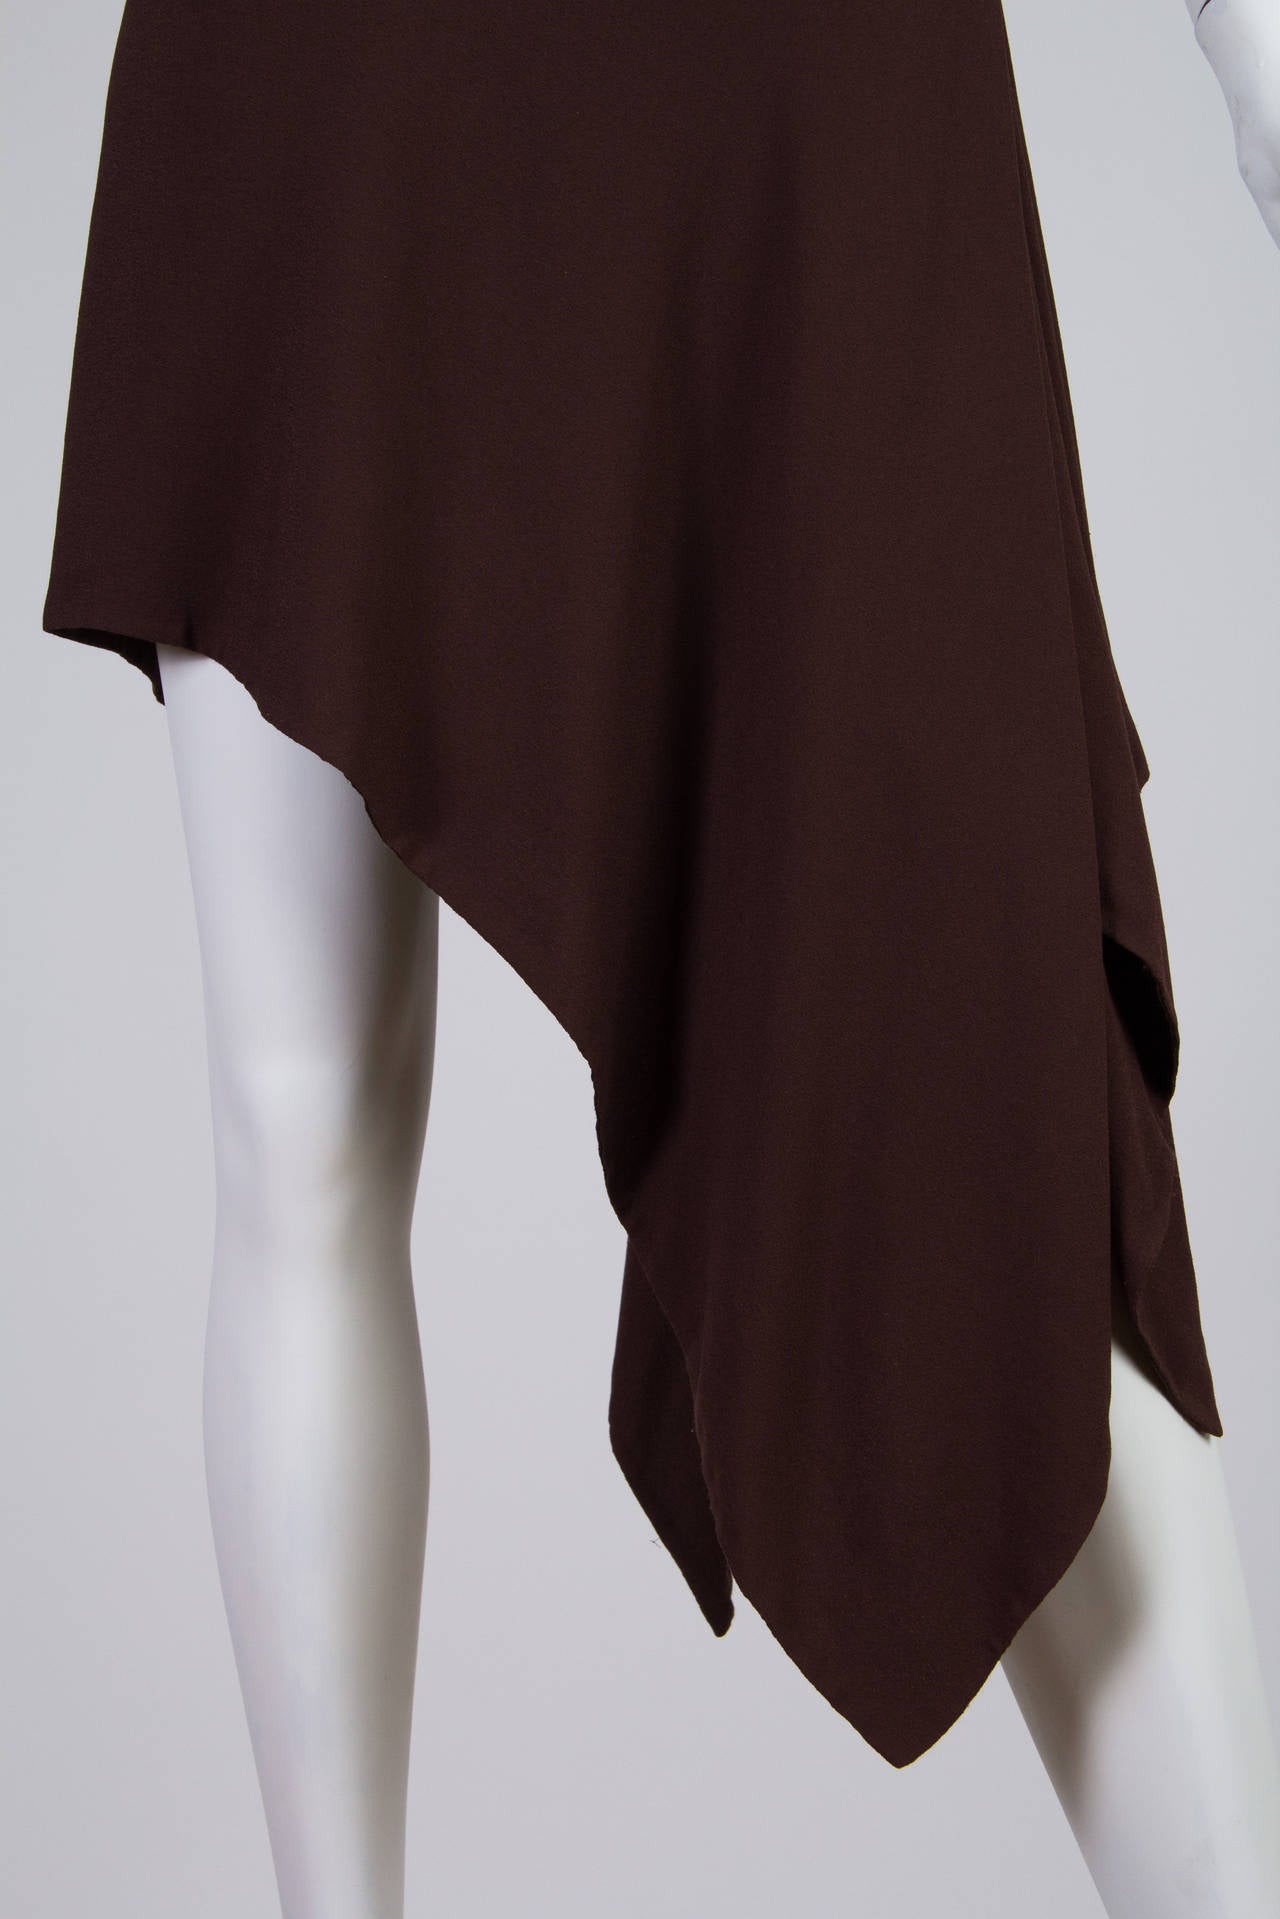 Women's Tom Ford for Gucci Asymmetrical Silk Jersey Dress